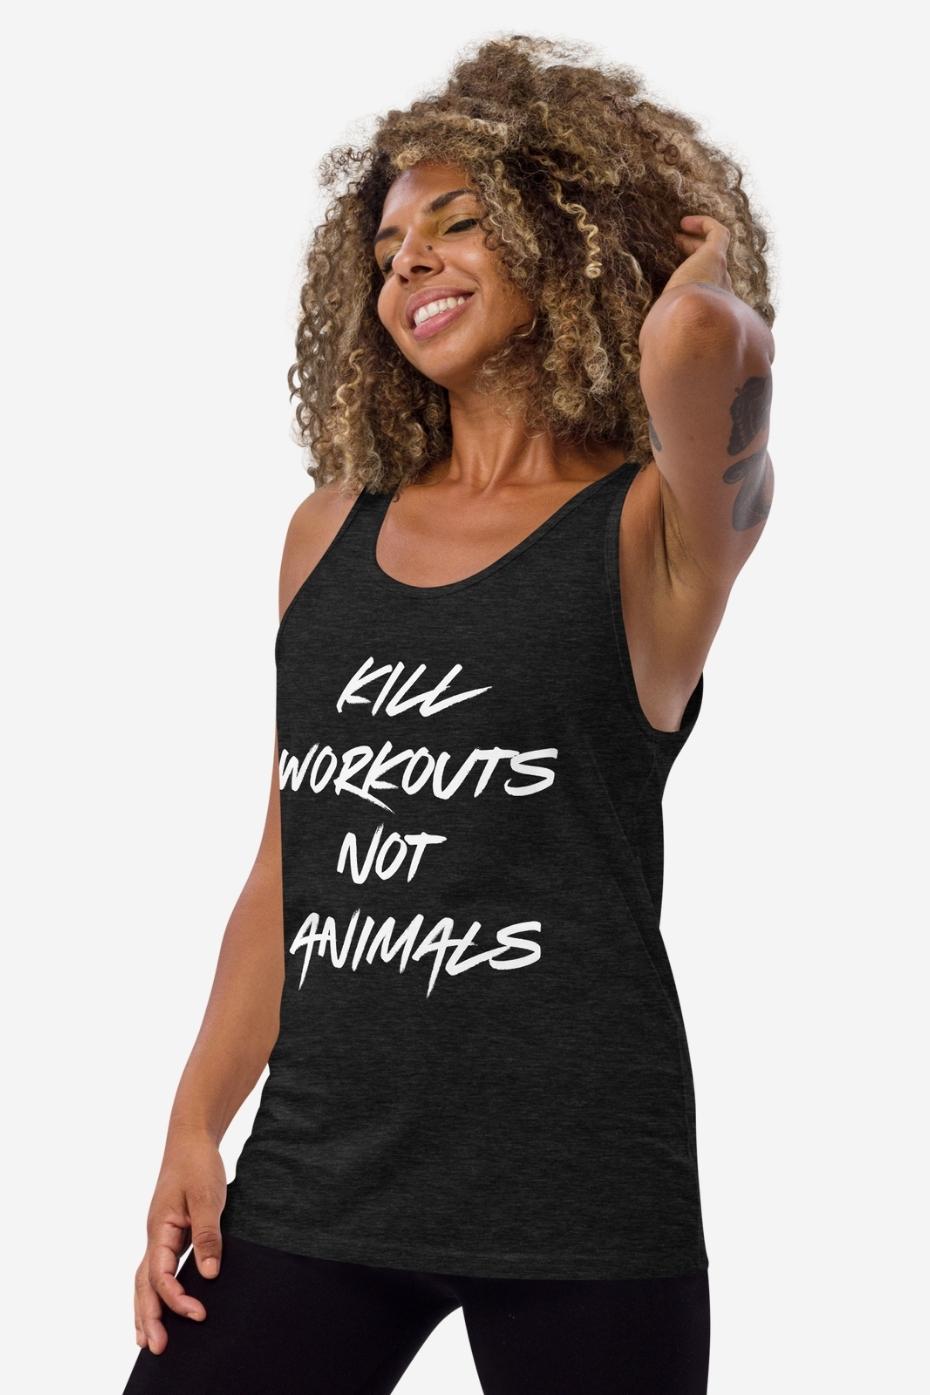 Kill Workouts Not Animals - Unisex Tank Top